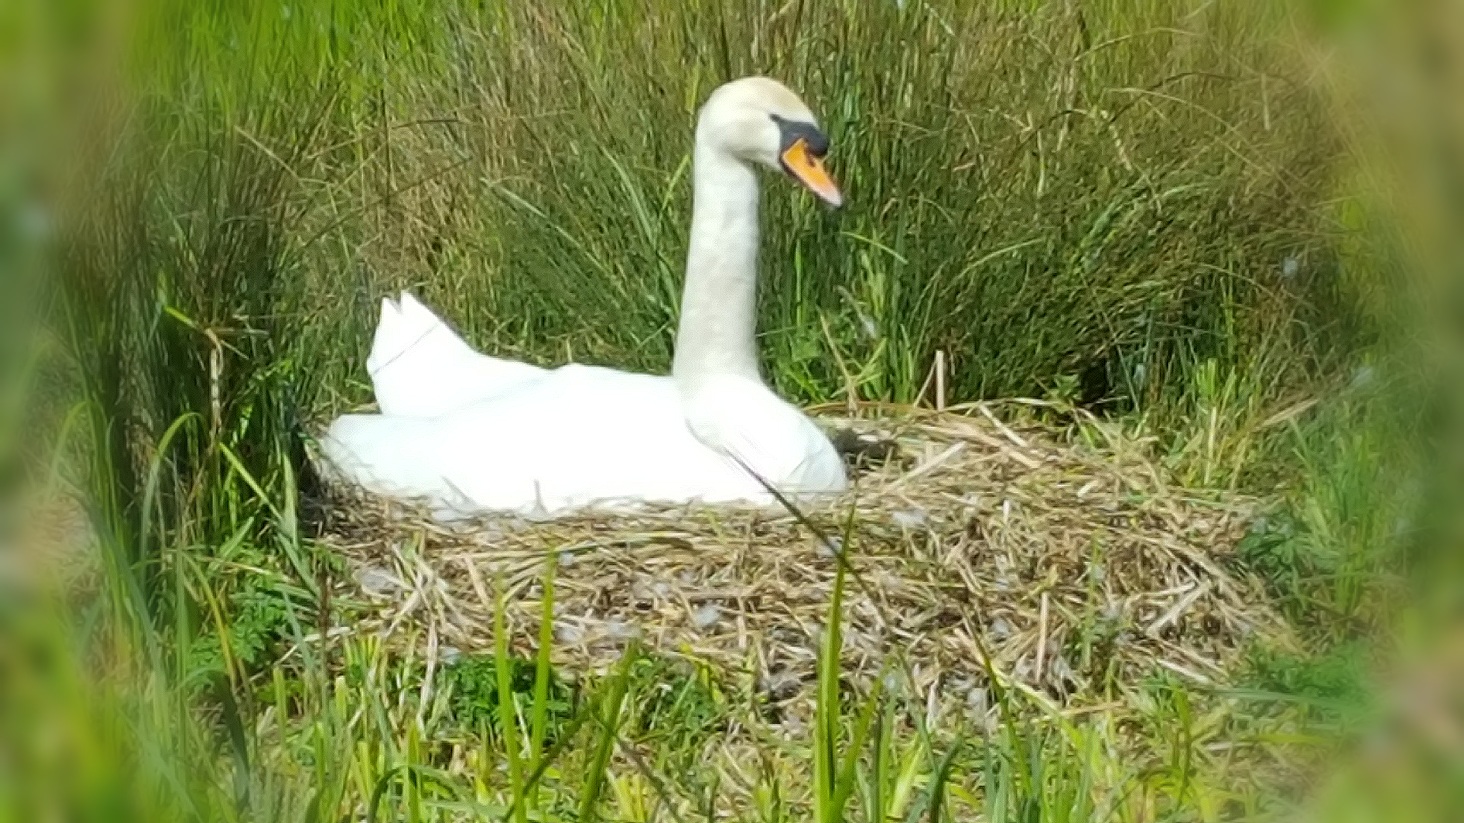 A nesting swan